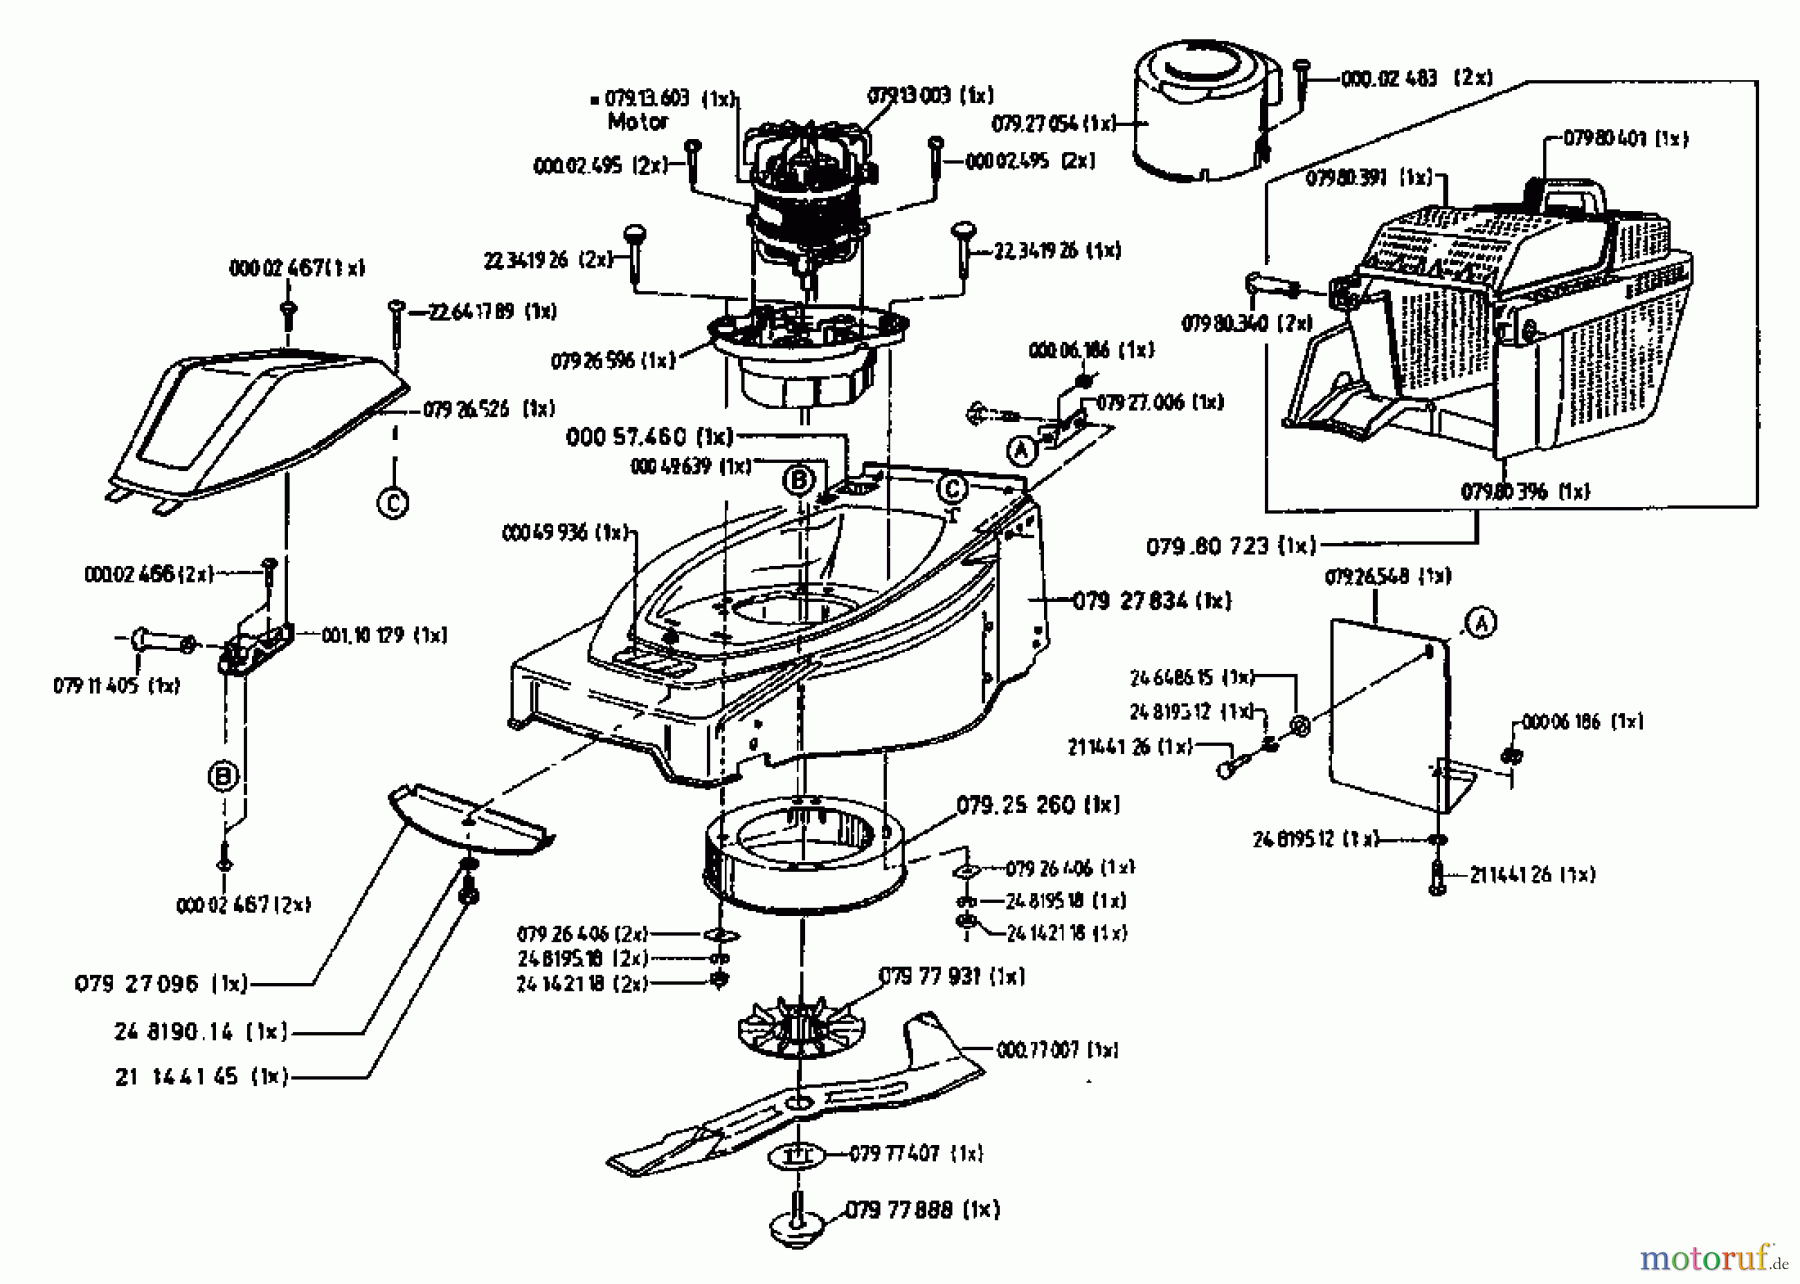  Gutbrod Electric mower HE 42 04030.07  (1996) Basic machine